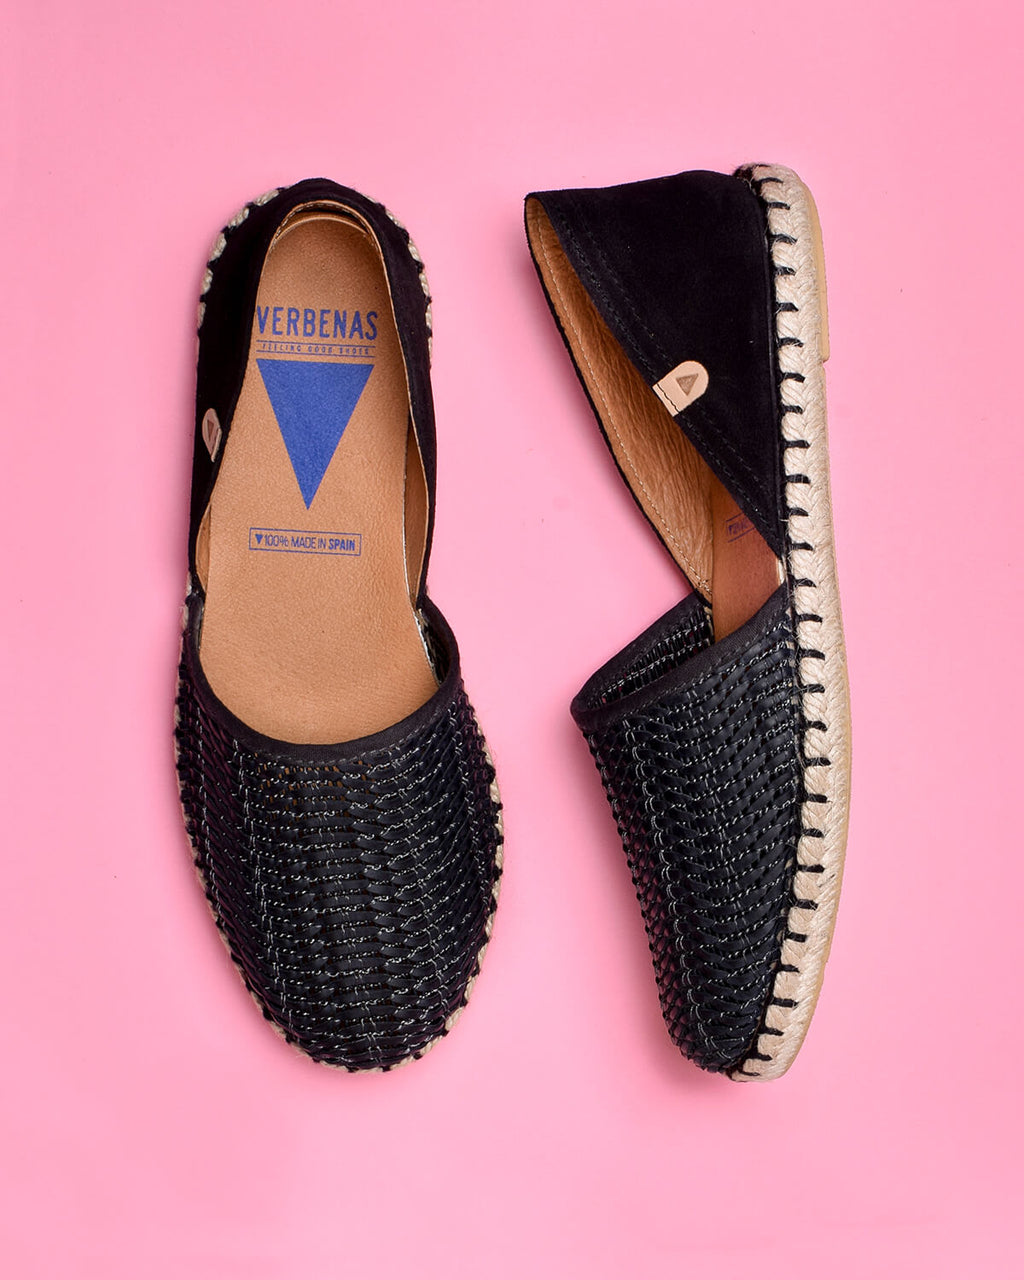 verbenas shoes buy online